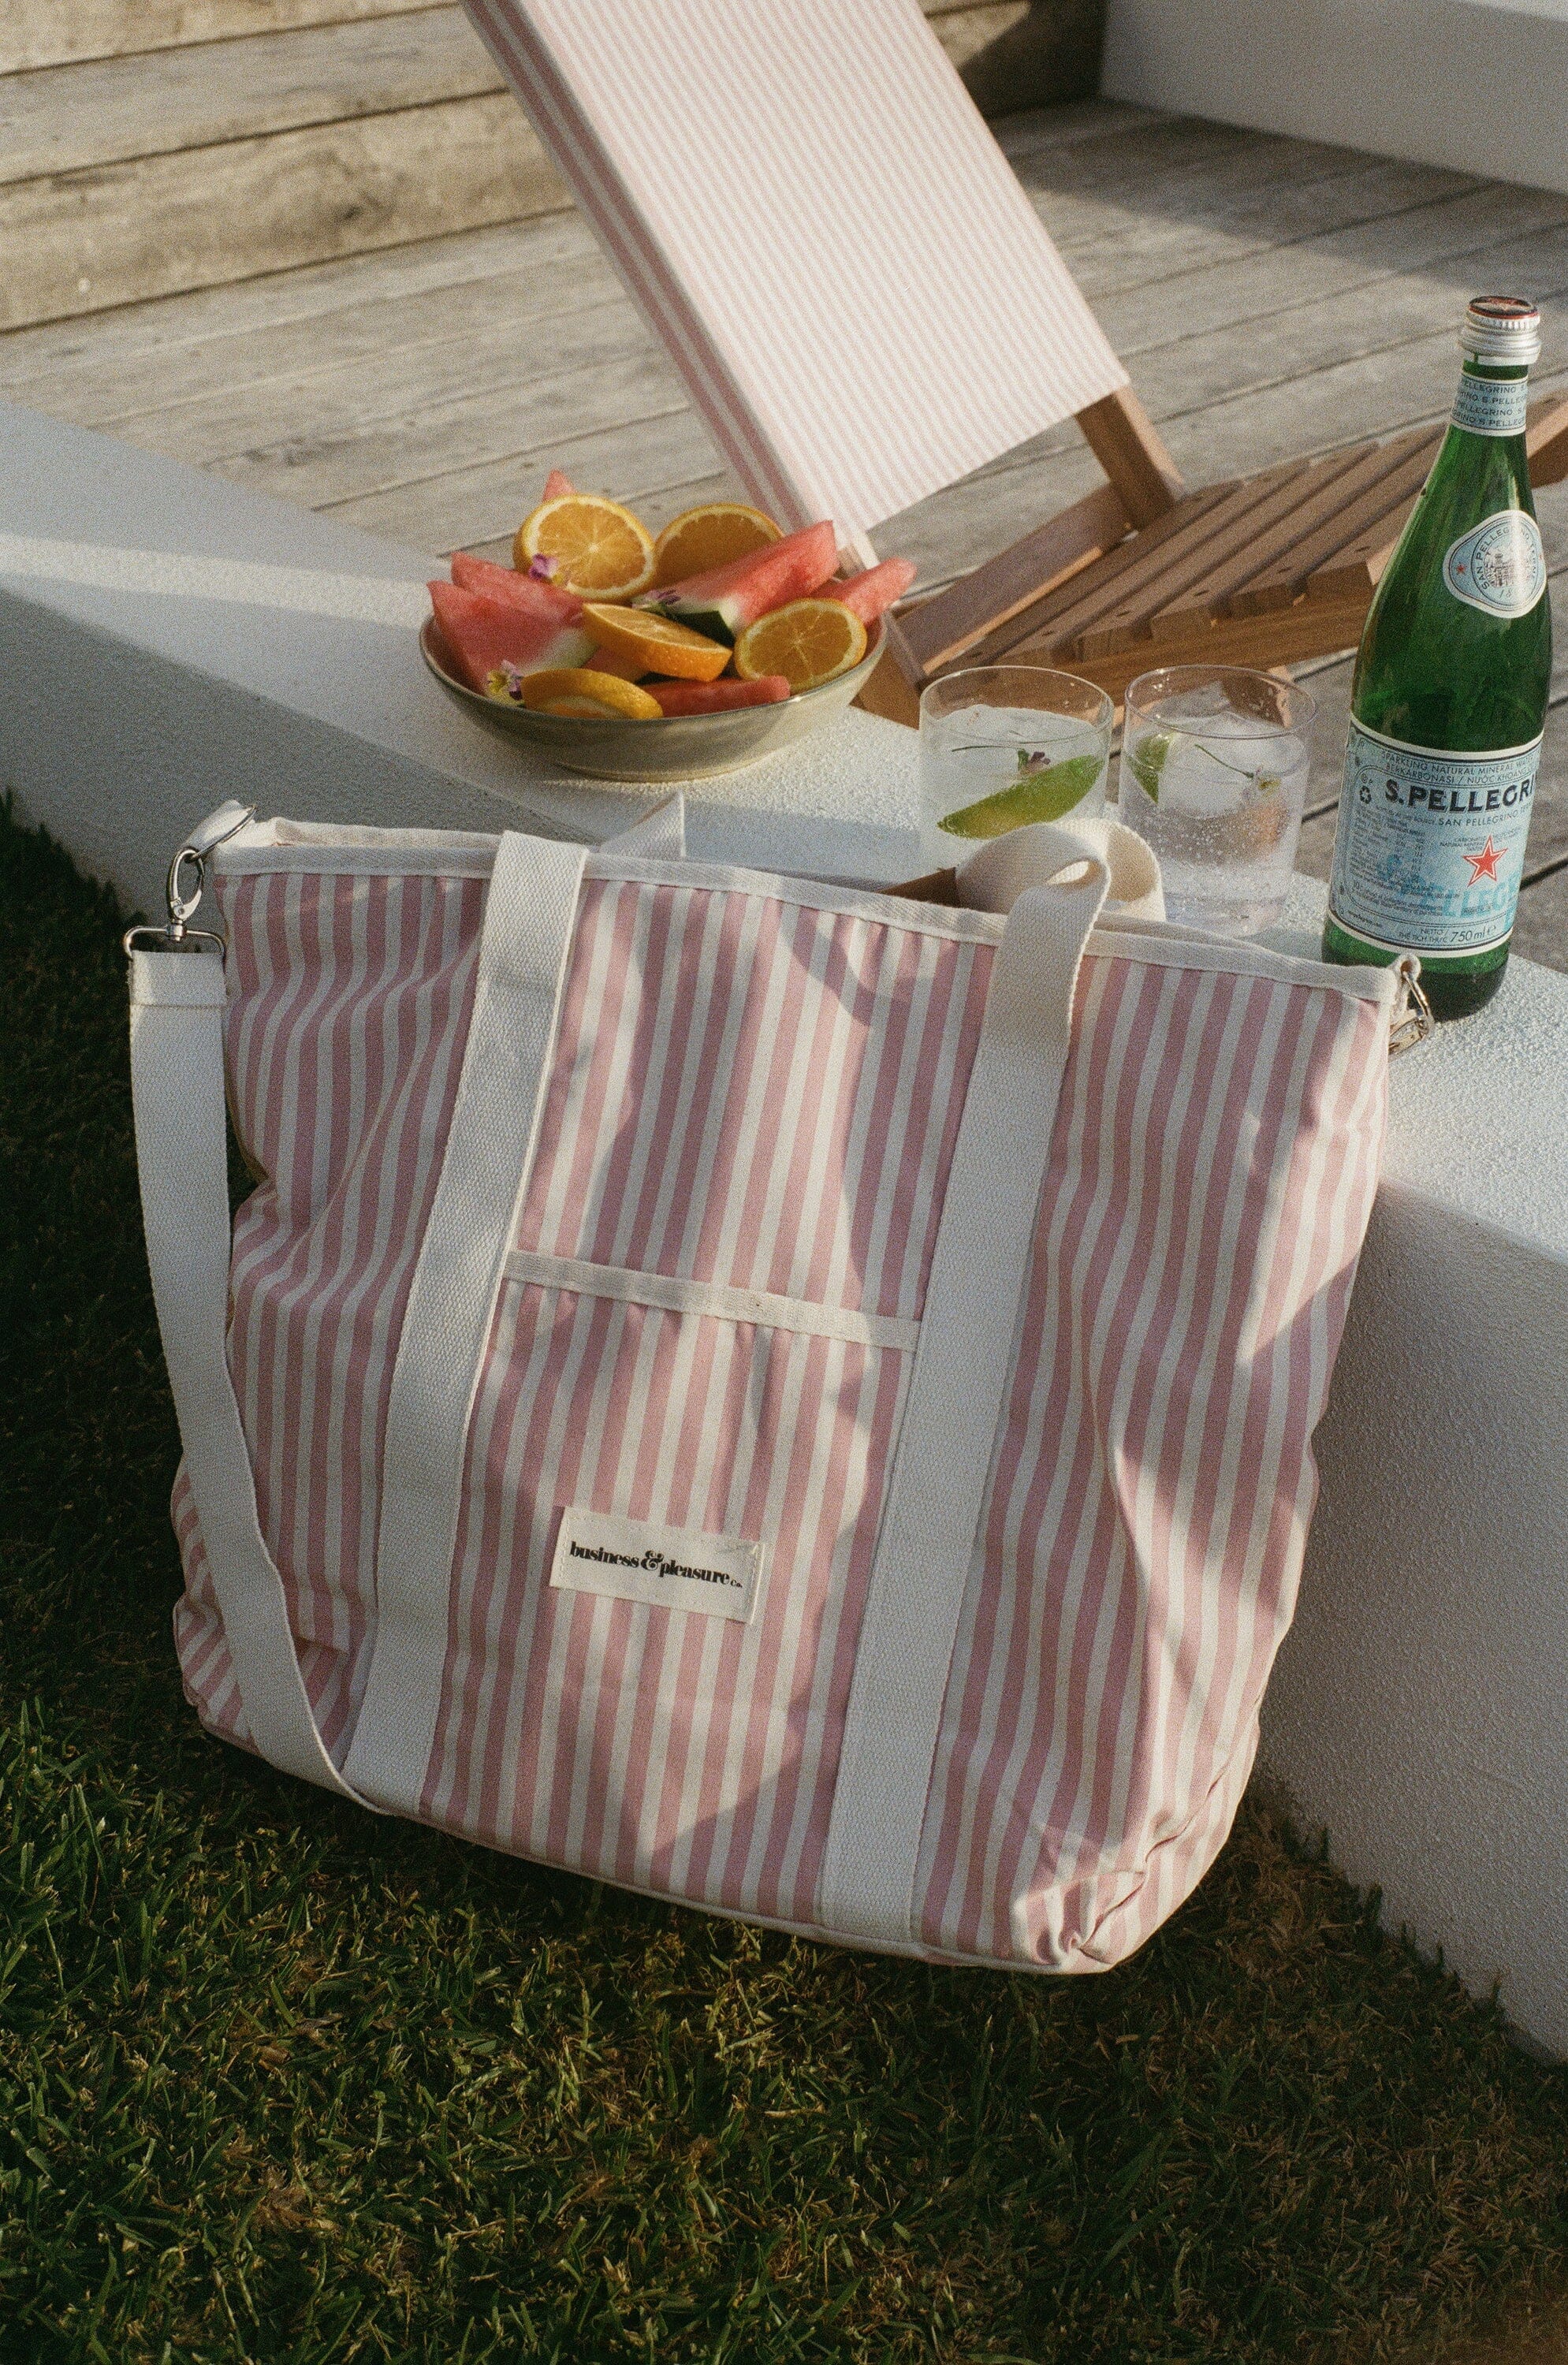 The Cooler Tote Bag - Lauren's Pink Stripe Cooler Tote Business & Pleasure Co 